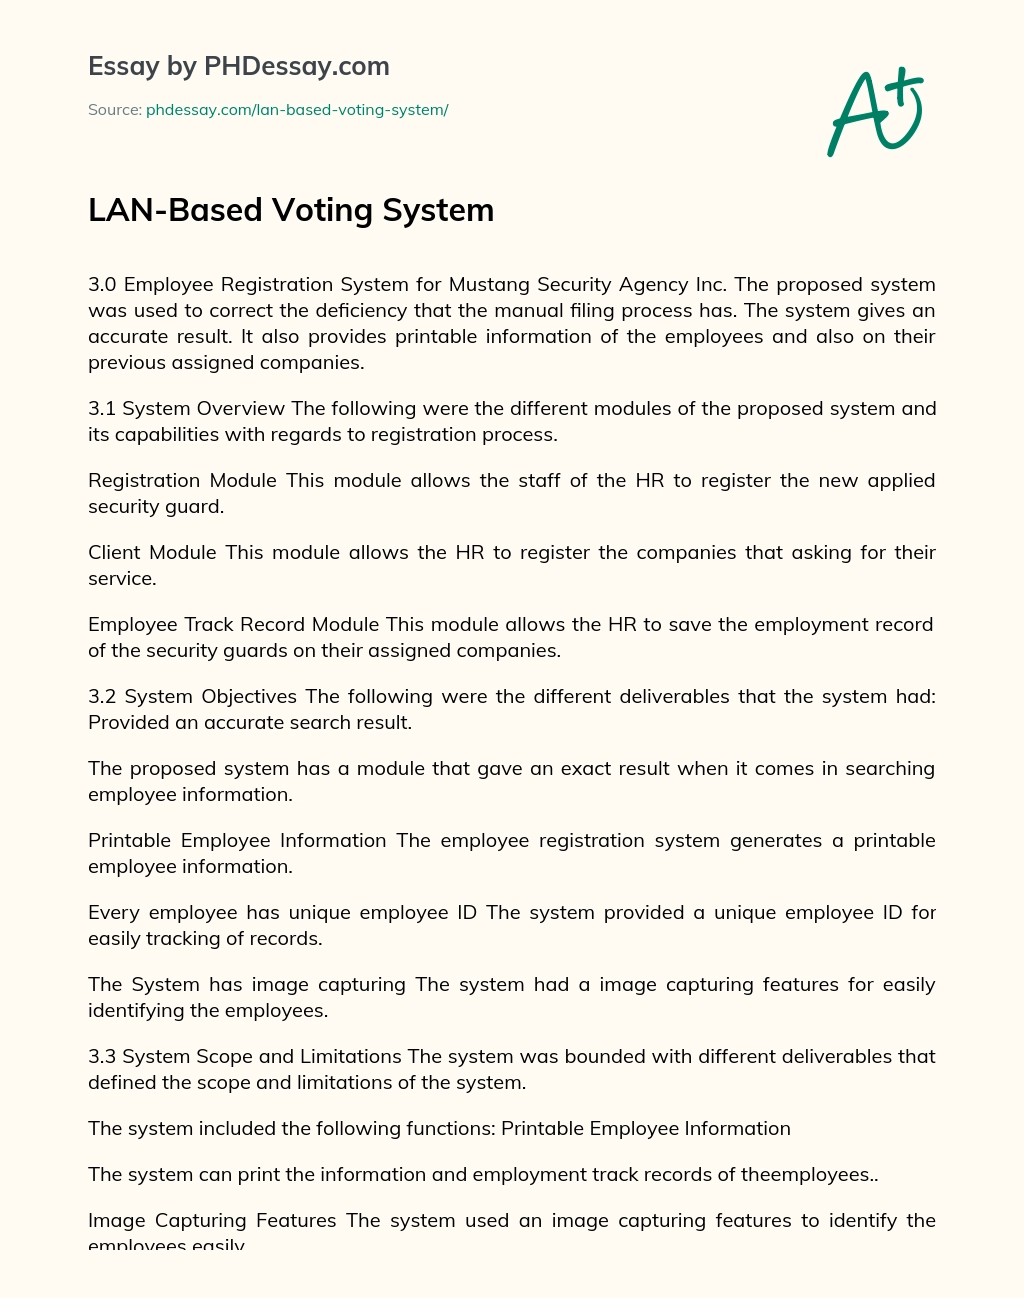 LAN-Based Voting System essay